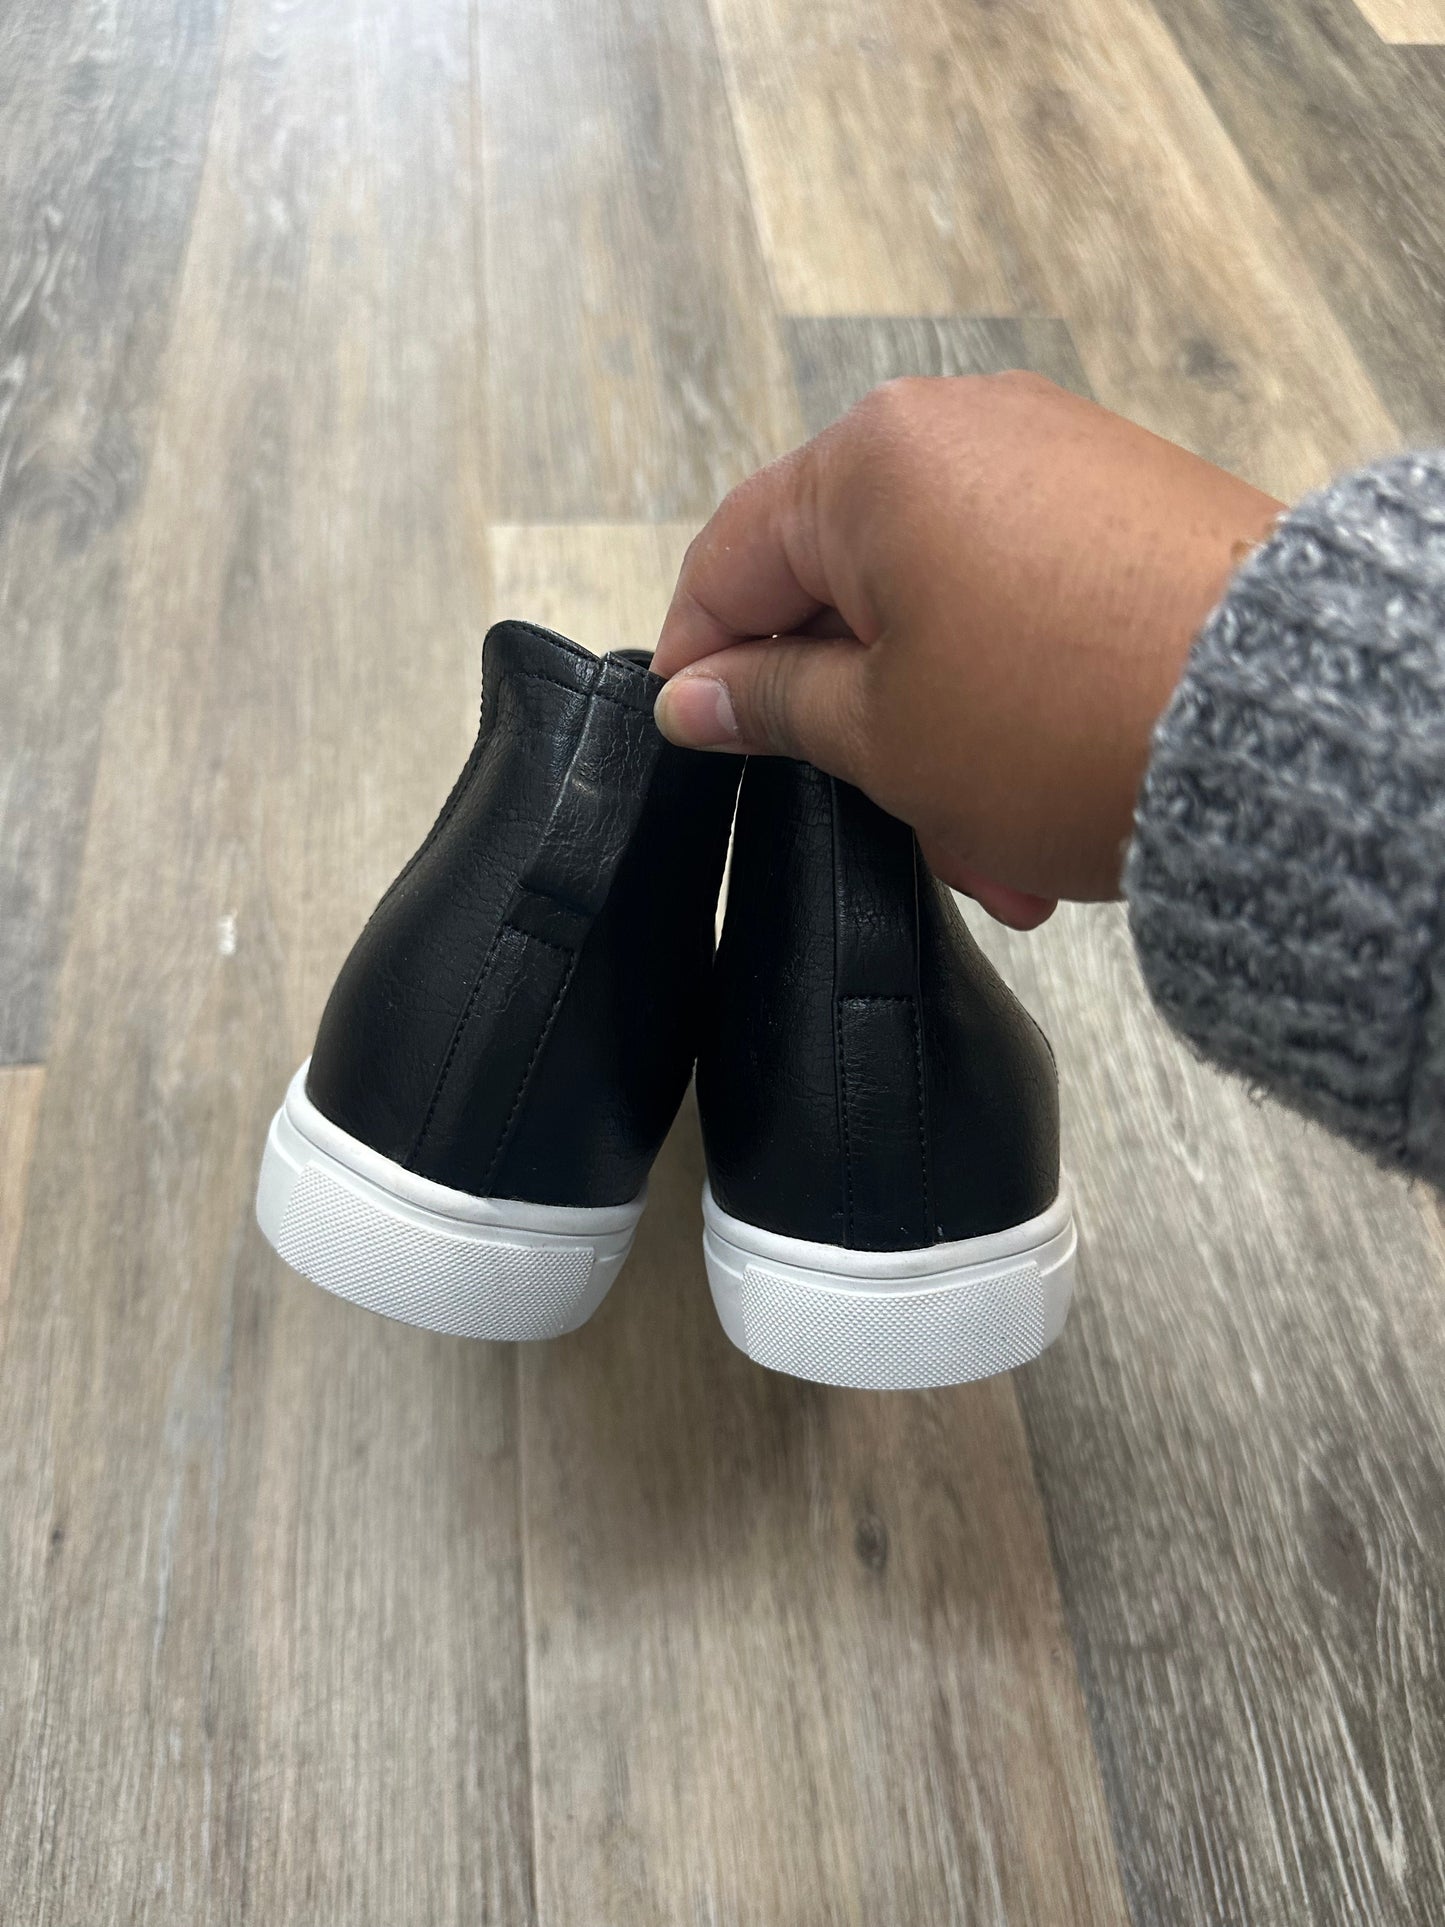 Black Shoes Flats Beast Fashion, Size 9